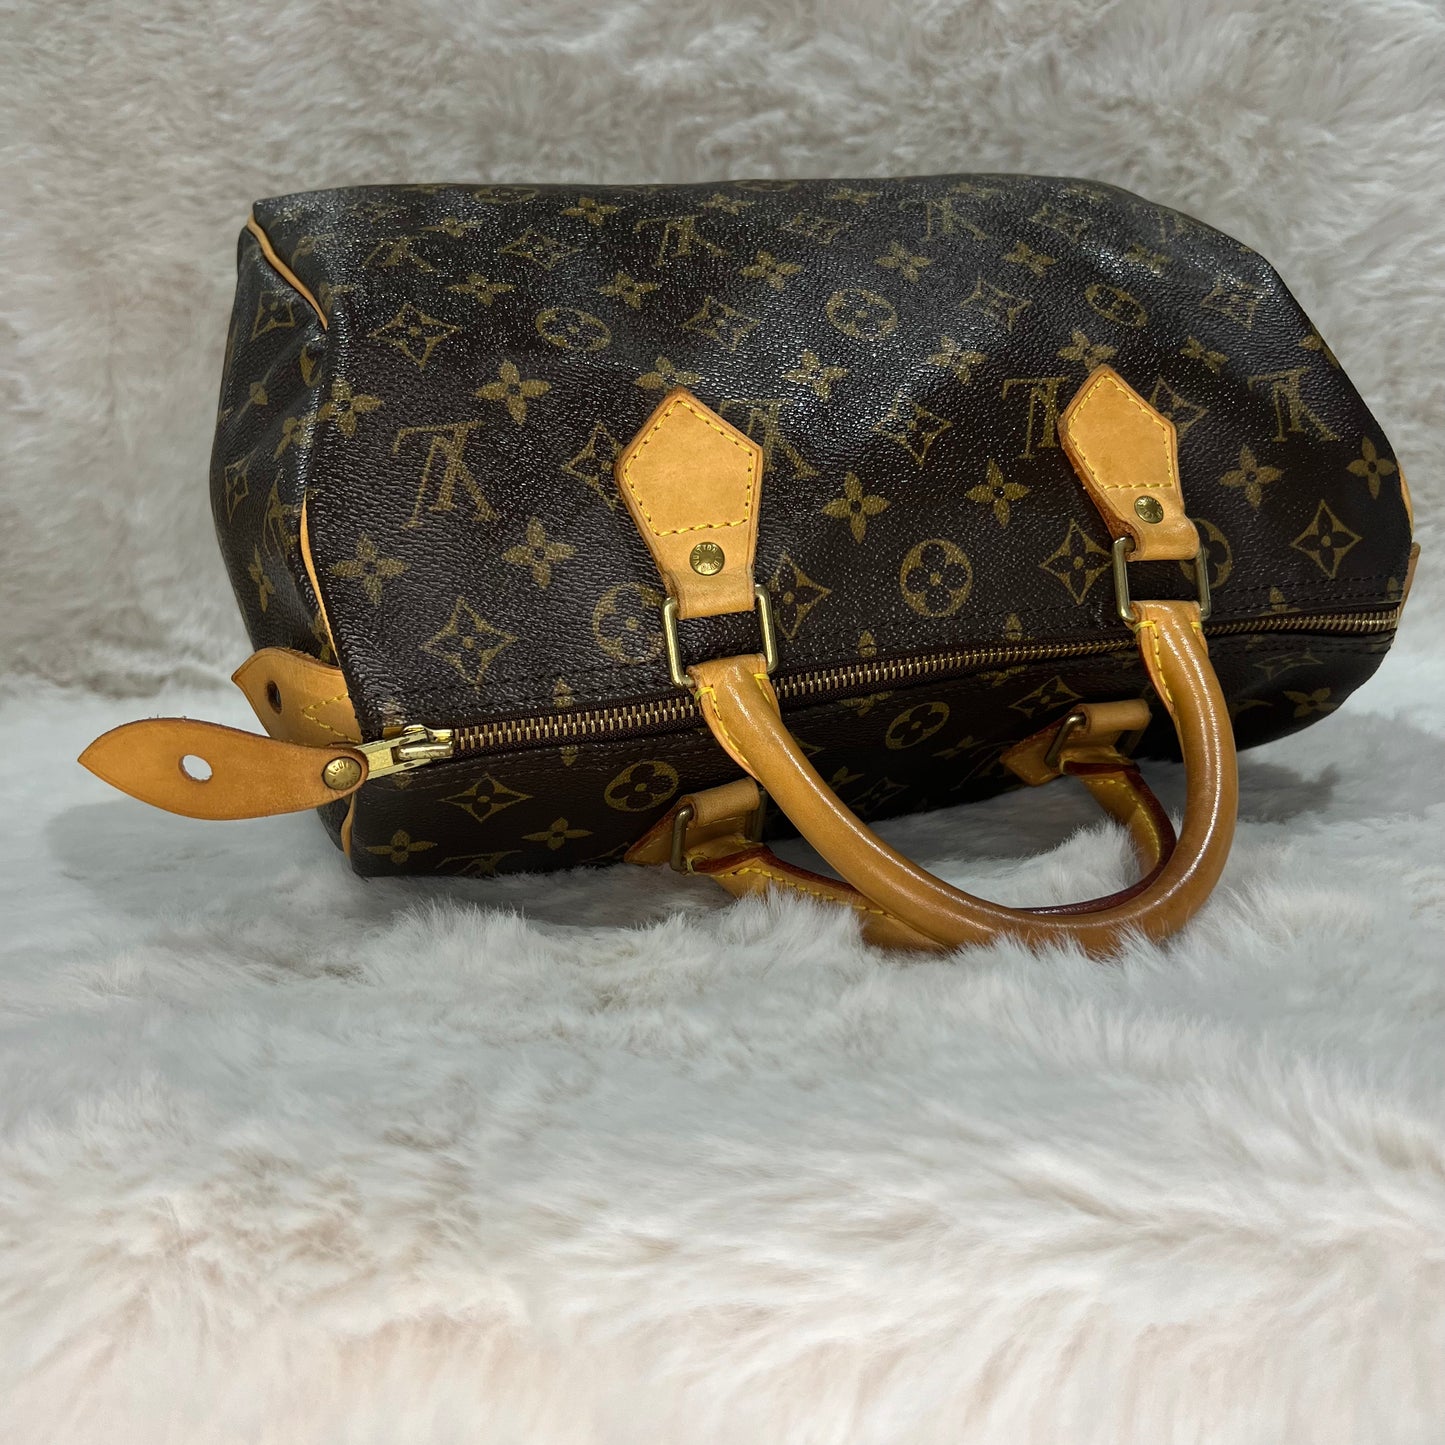 Monogram Louis Vuitton Speedy 30 Handbag